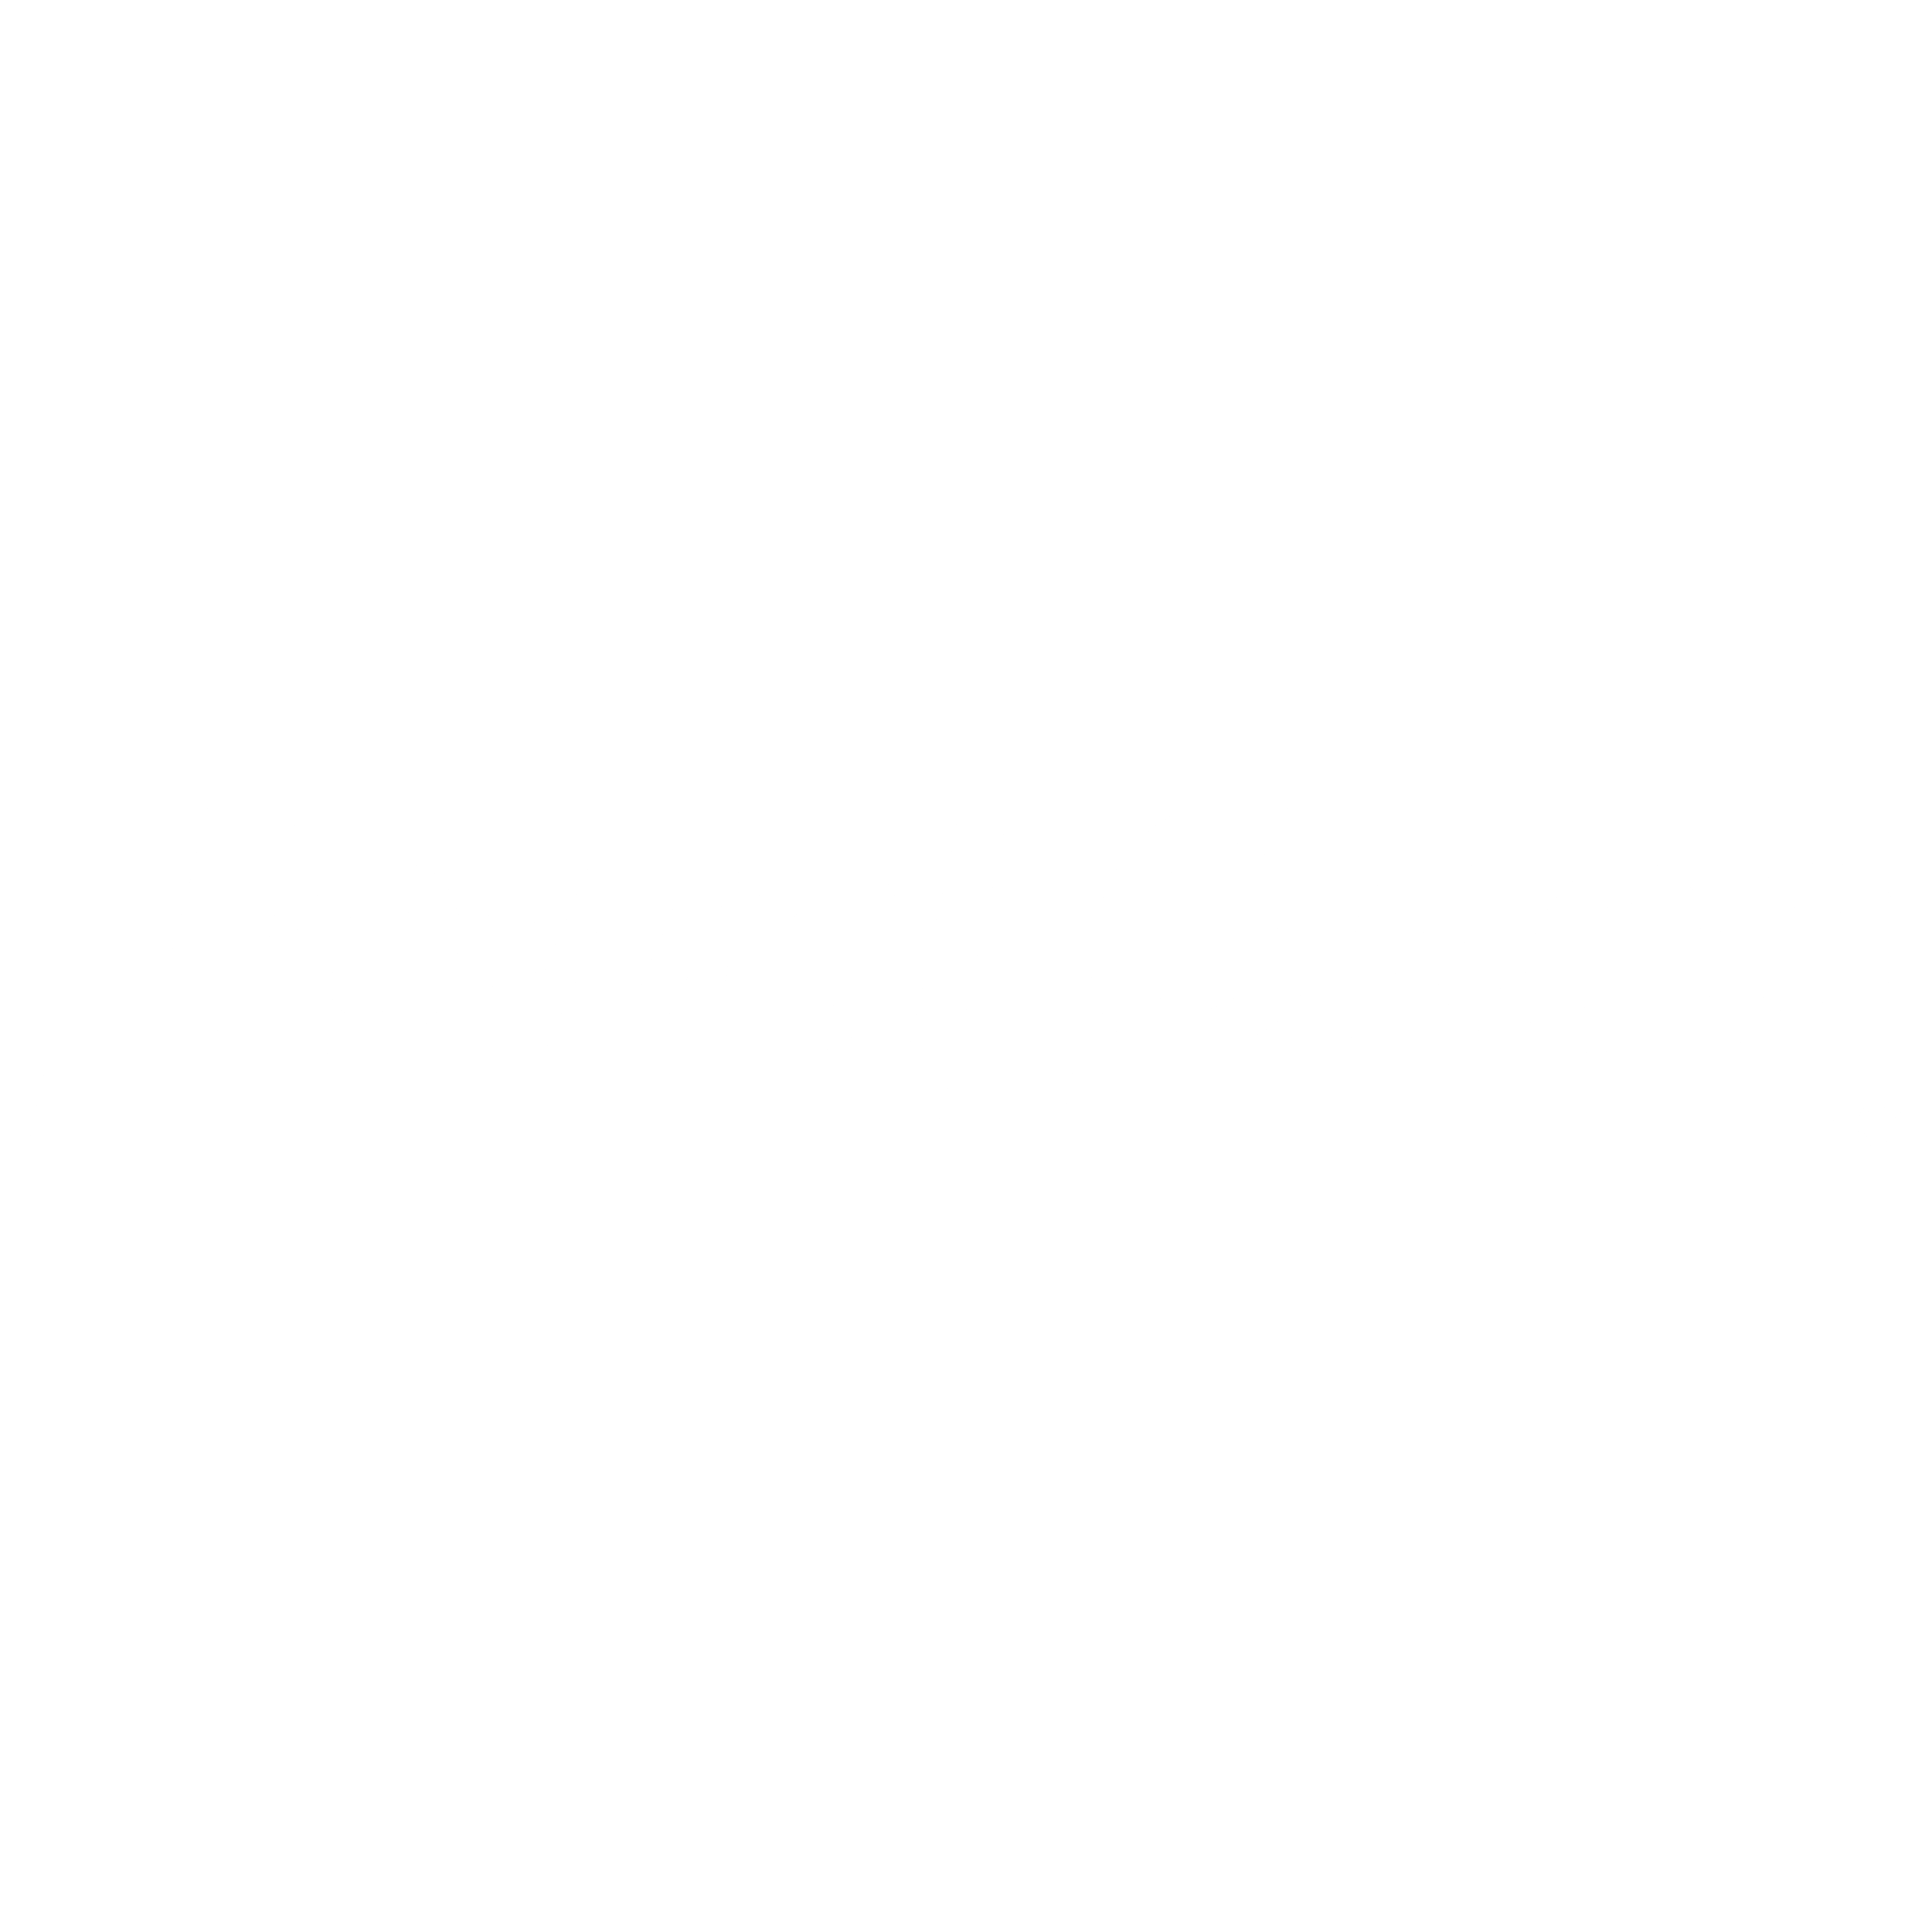 Jewel-Osco Logo - Jewel Osco Logo PNG Transparent & SVG Vector